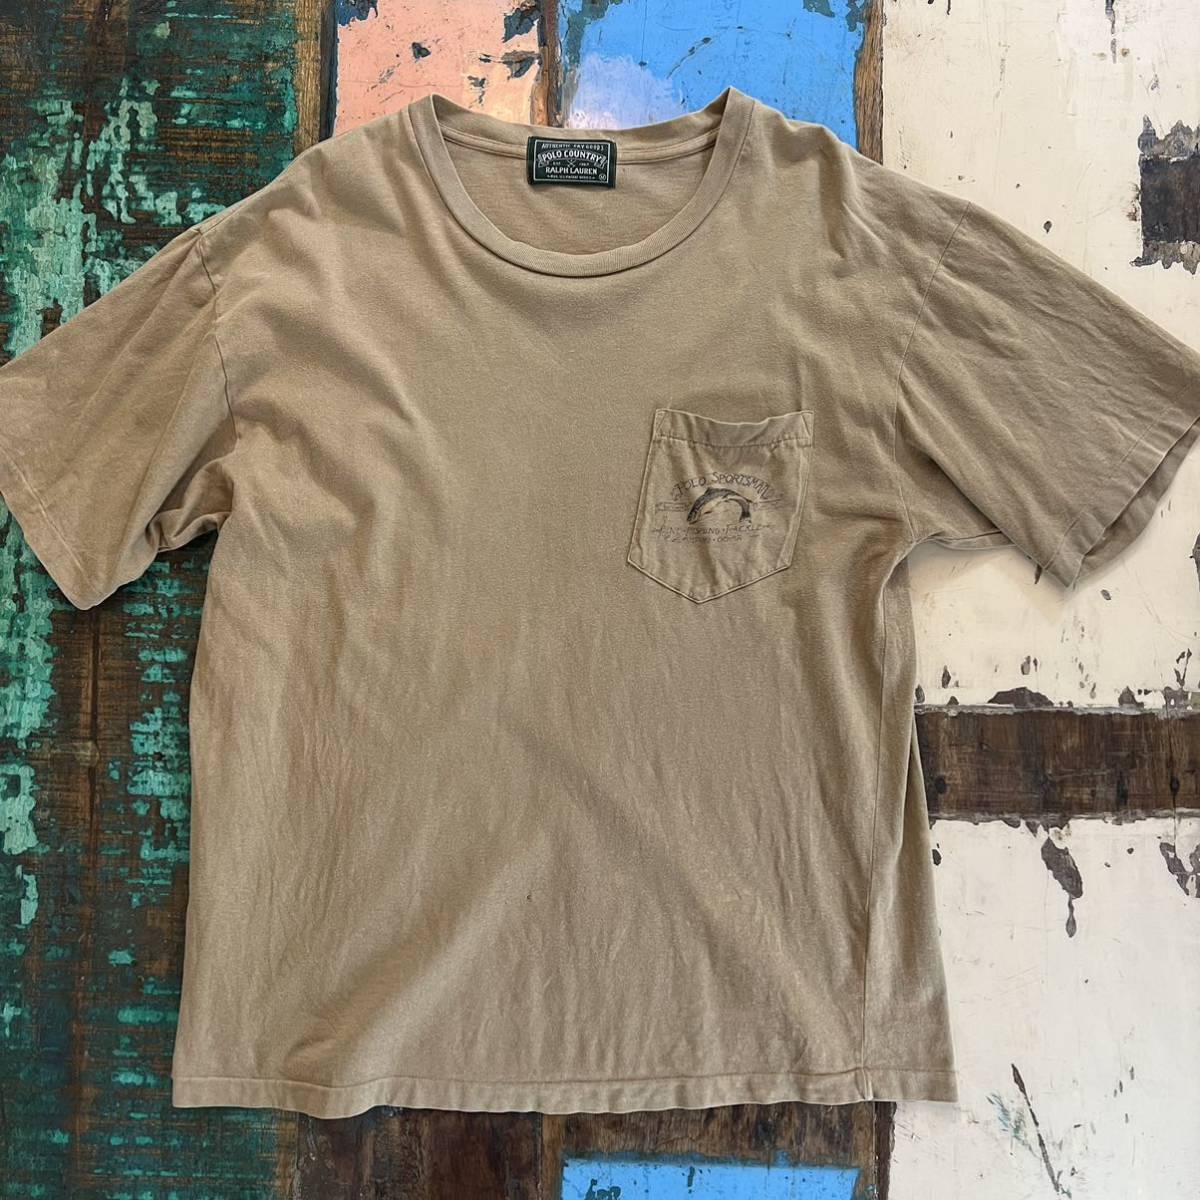 90's POLO COUNTRY USA製 ポケットTシャツ M Ralph Lauren SPORTS ポロカントリー フィッシング ポケT サイズM